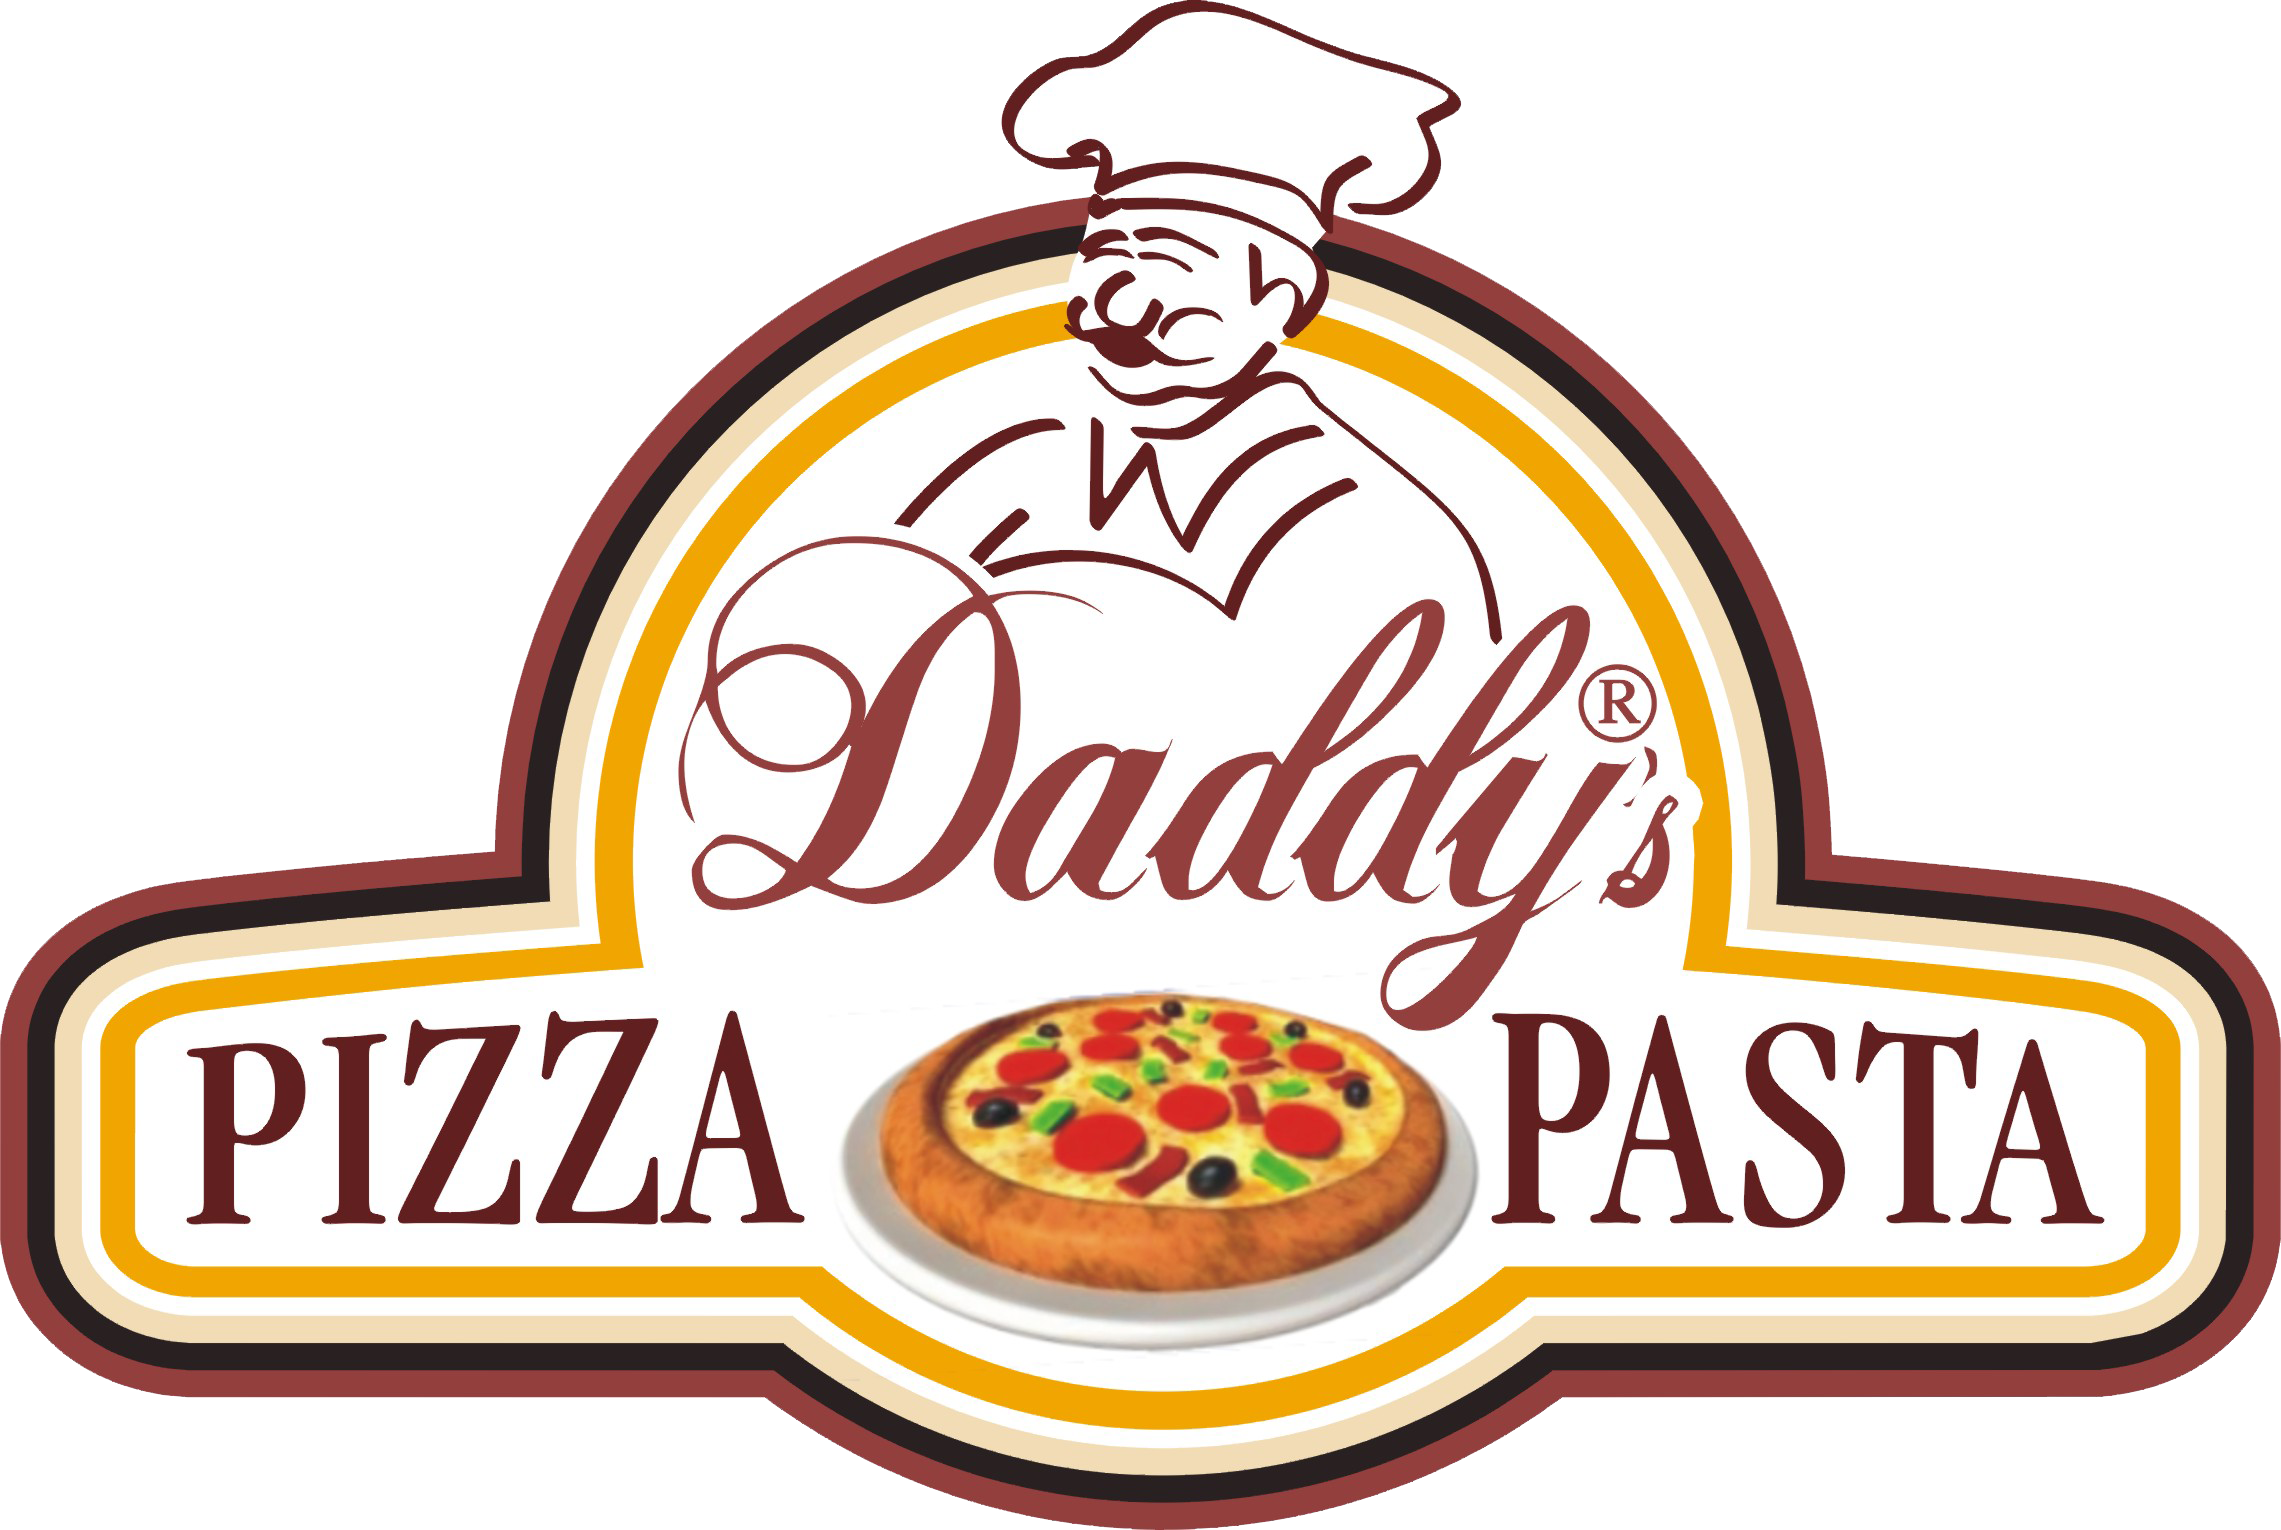 Daddys Pizza&Pasta